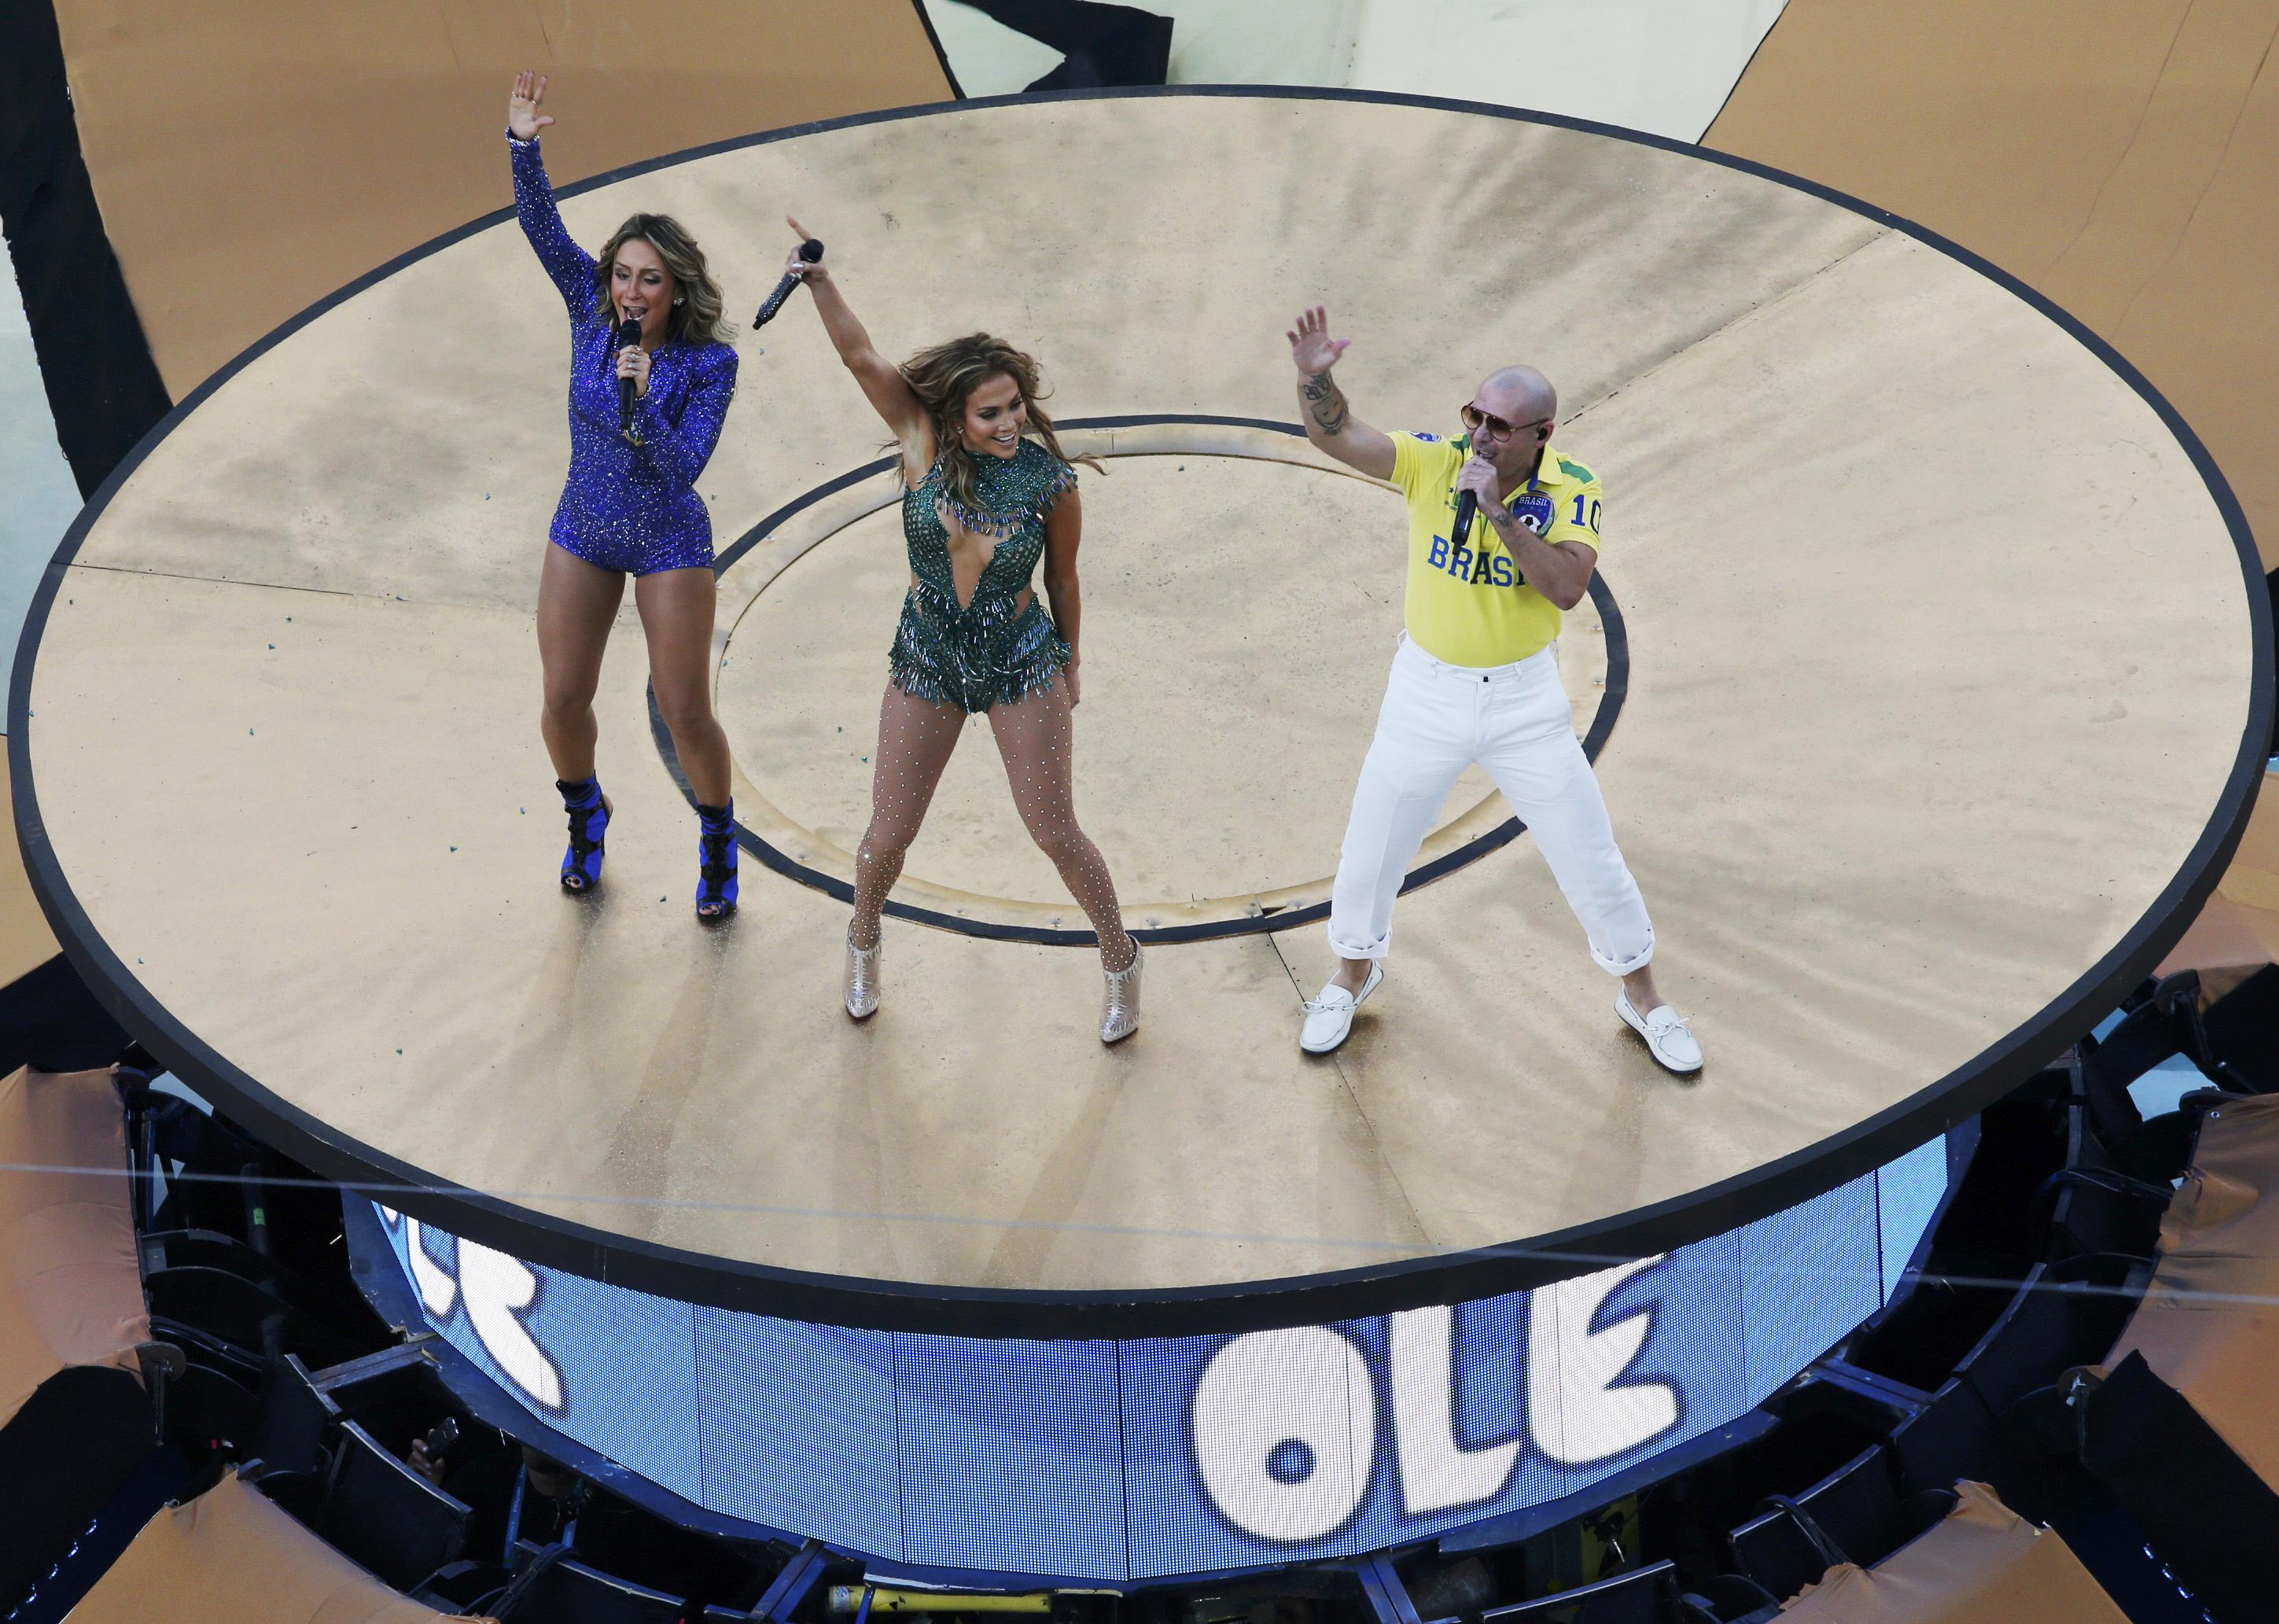 JLO y Pitbull dieron la patada musical en el #MundialBrasil2014 (Fotos)